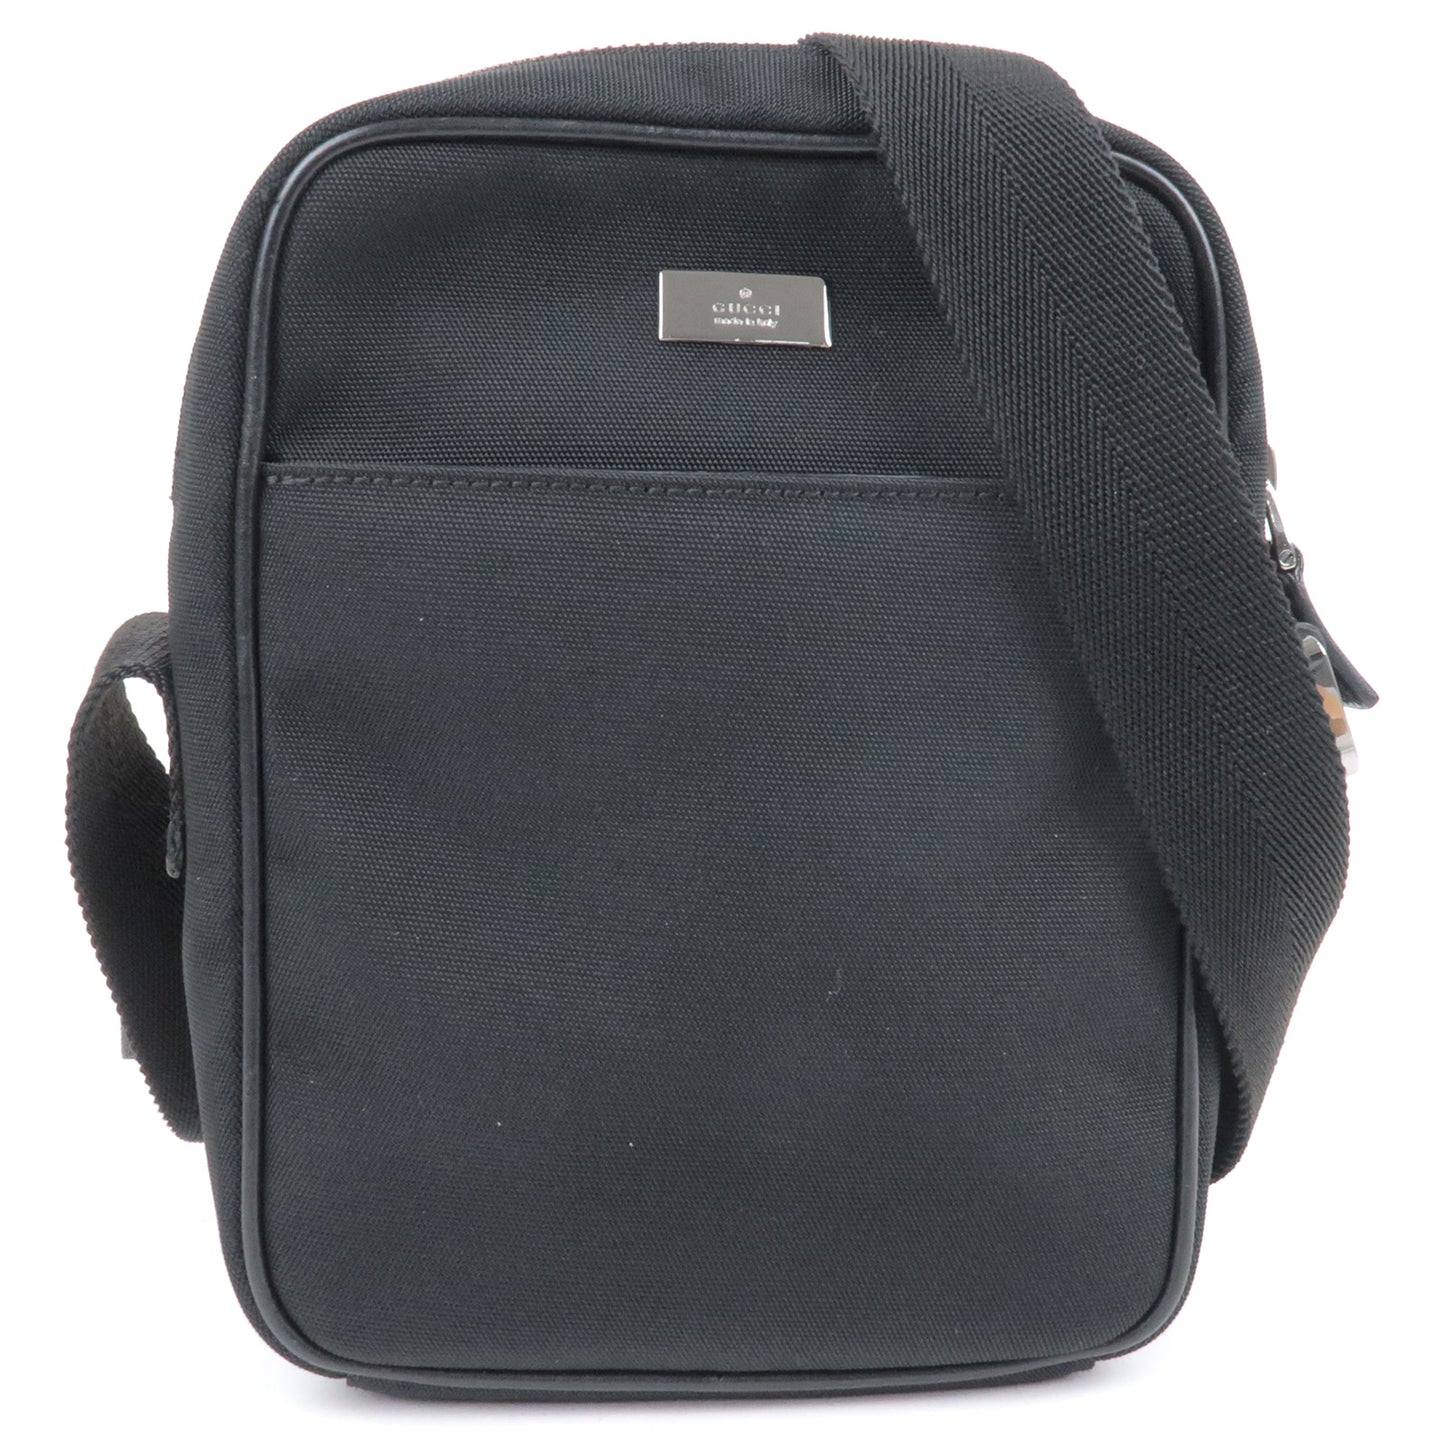 GUCCI-Nylon-Canvas-Leather-Shoulder-Bag-Purse-Black-122754